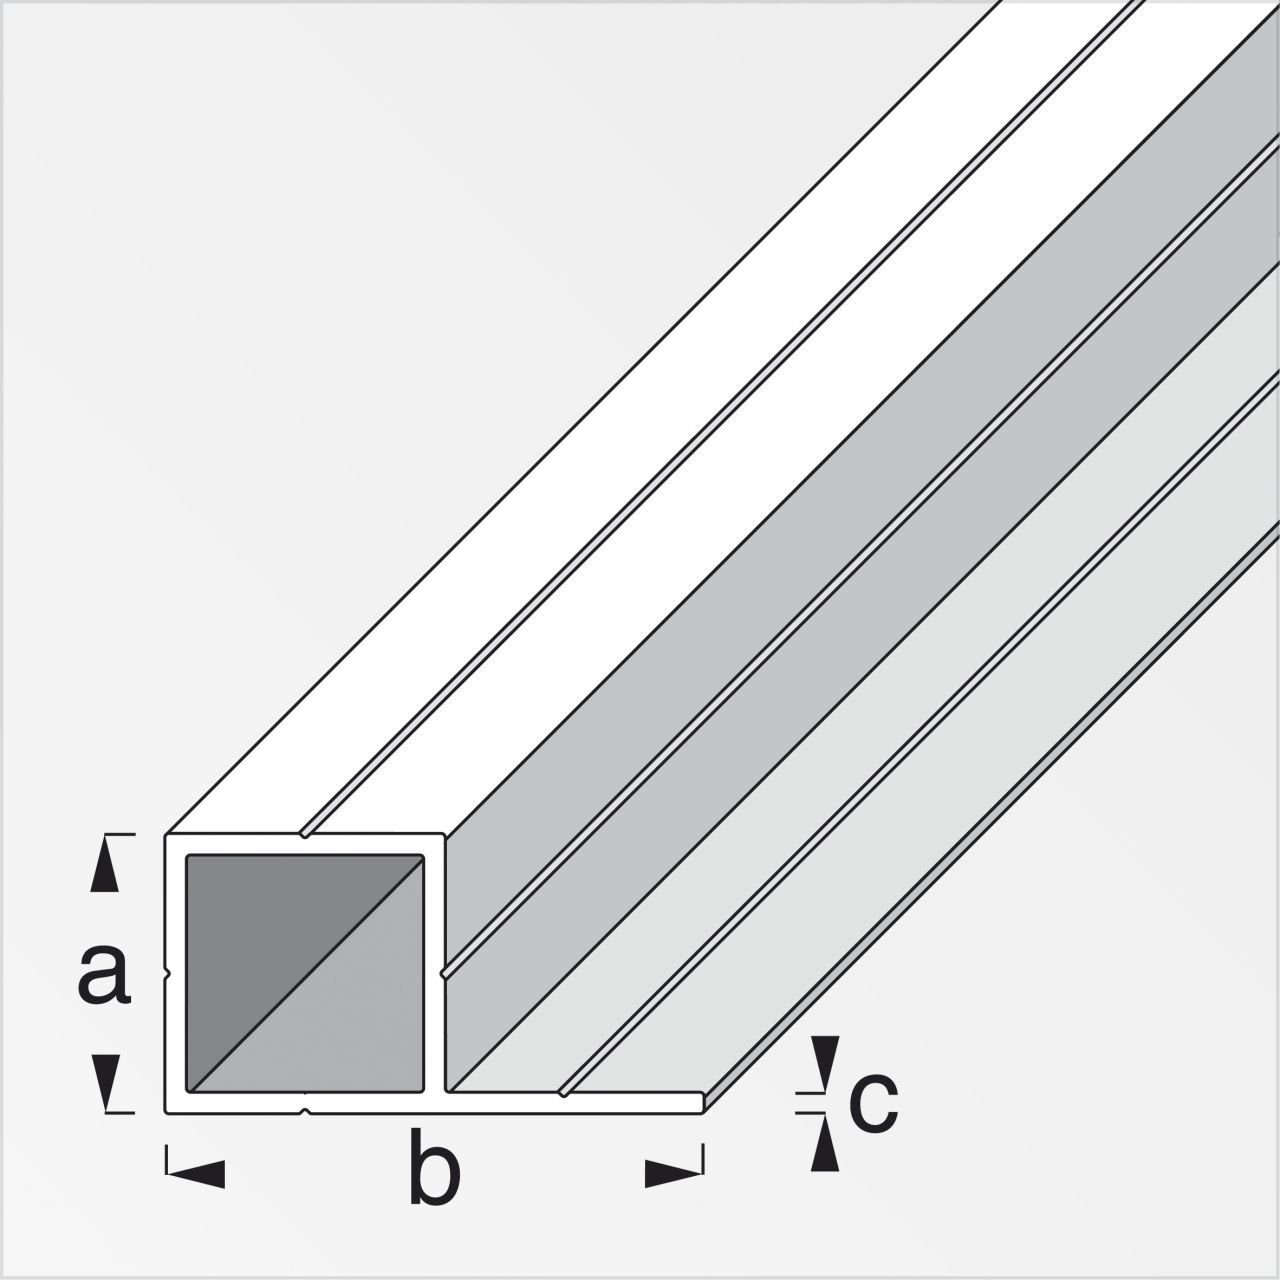 alfer alfer x 23.5 45.5 1 Quadratrohr, 1 Schenkel x m, Aluminium Vierkantstange